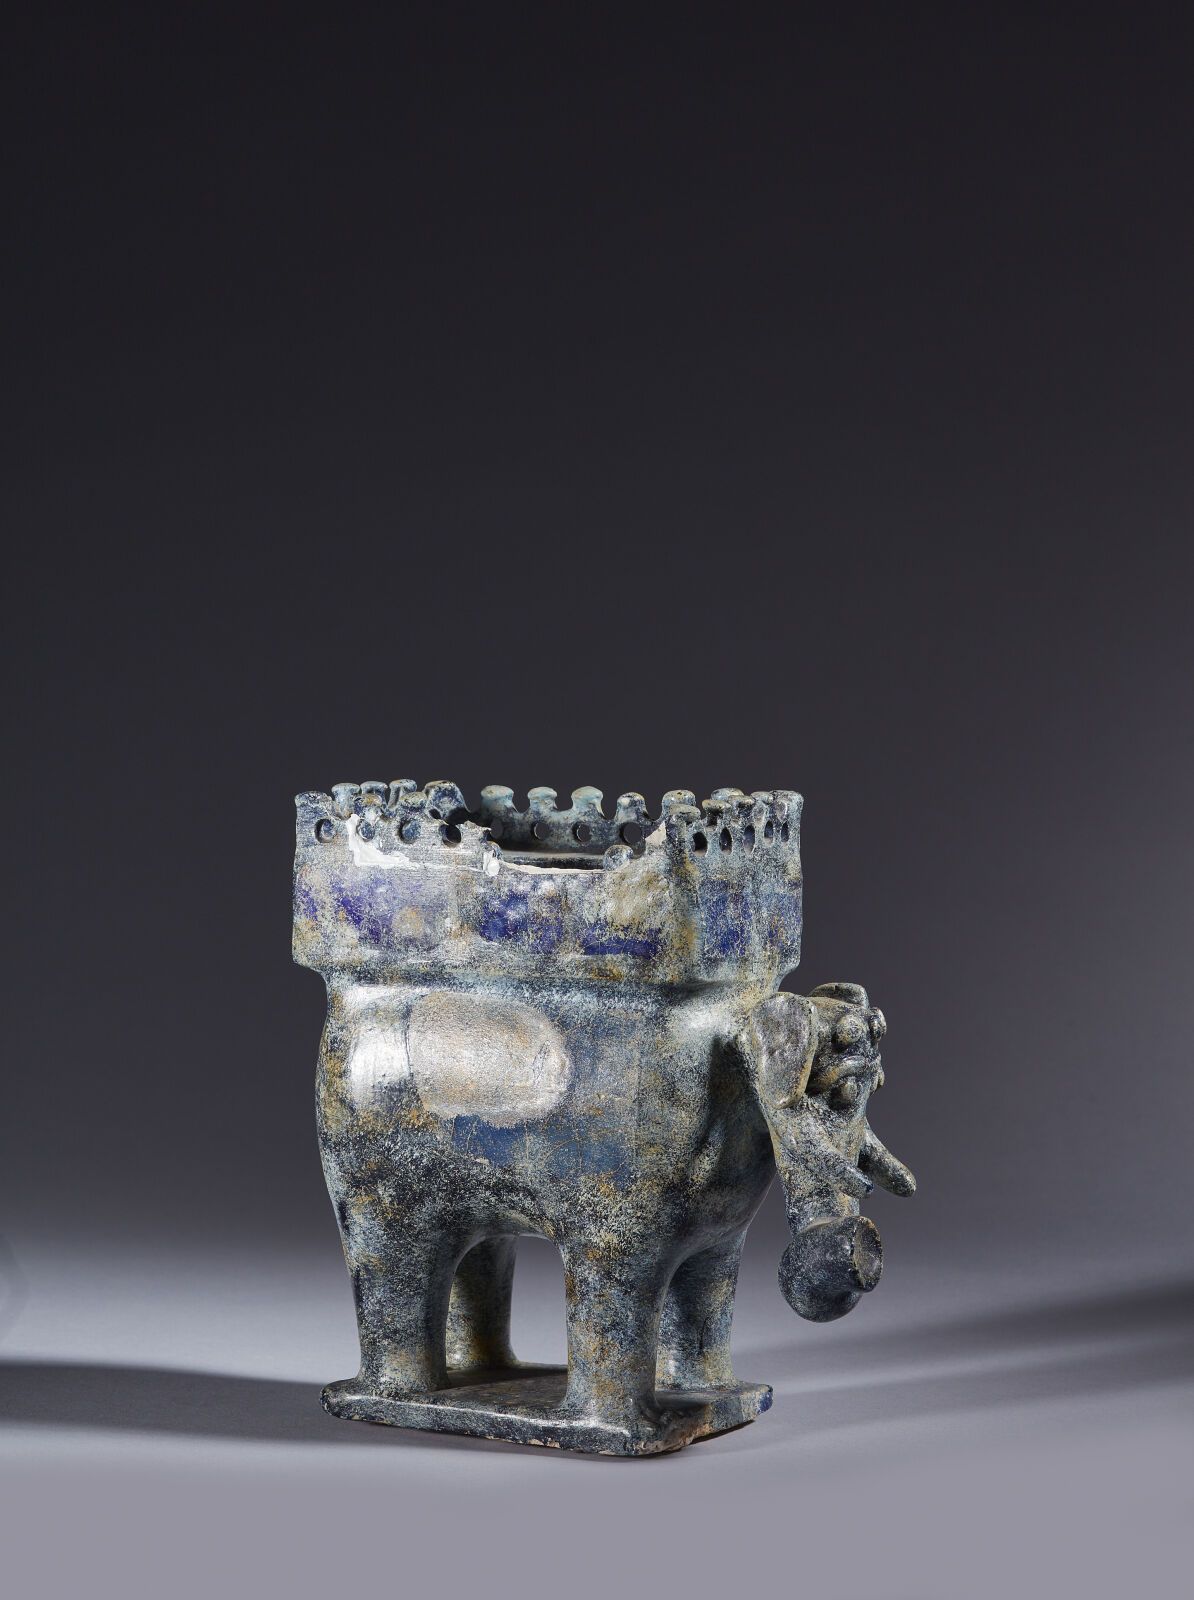 Null IRÁN, siglos XII-XIII
Figura redonda de cerámica silícea con decoración mol&hellip;